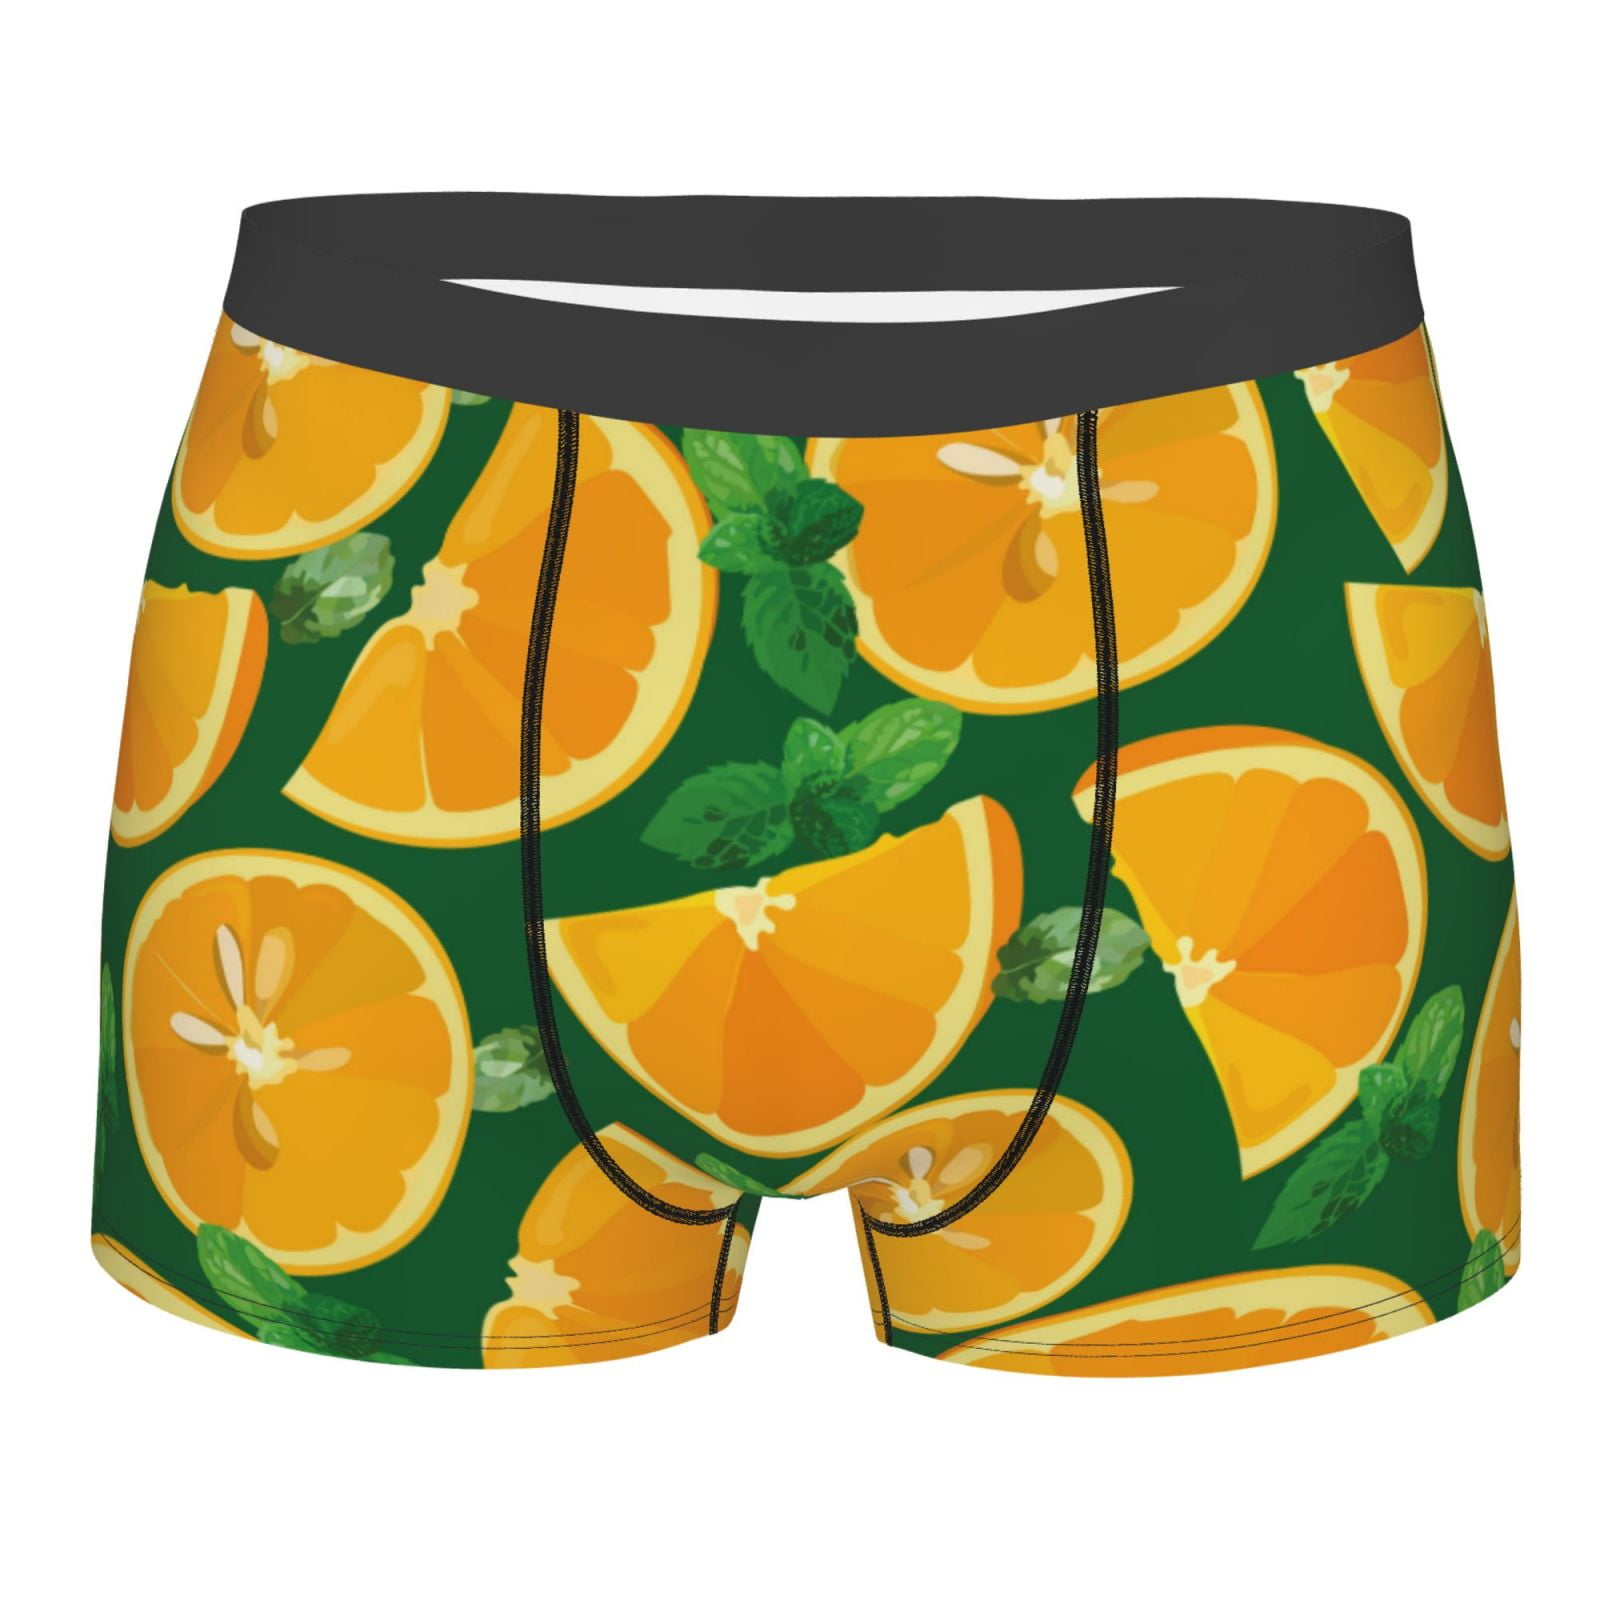 Balery Orange Men's Boxer Briefs, Soft and Breathable Cotton Underwear ...